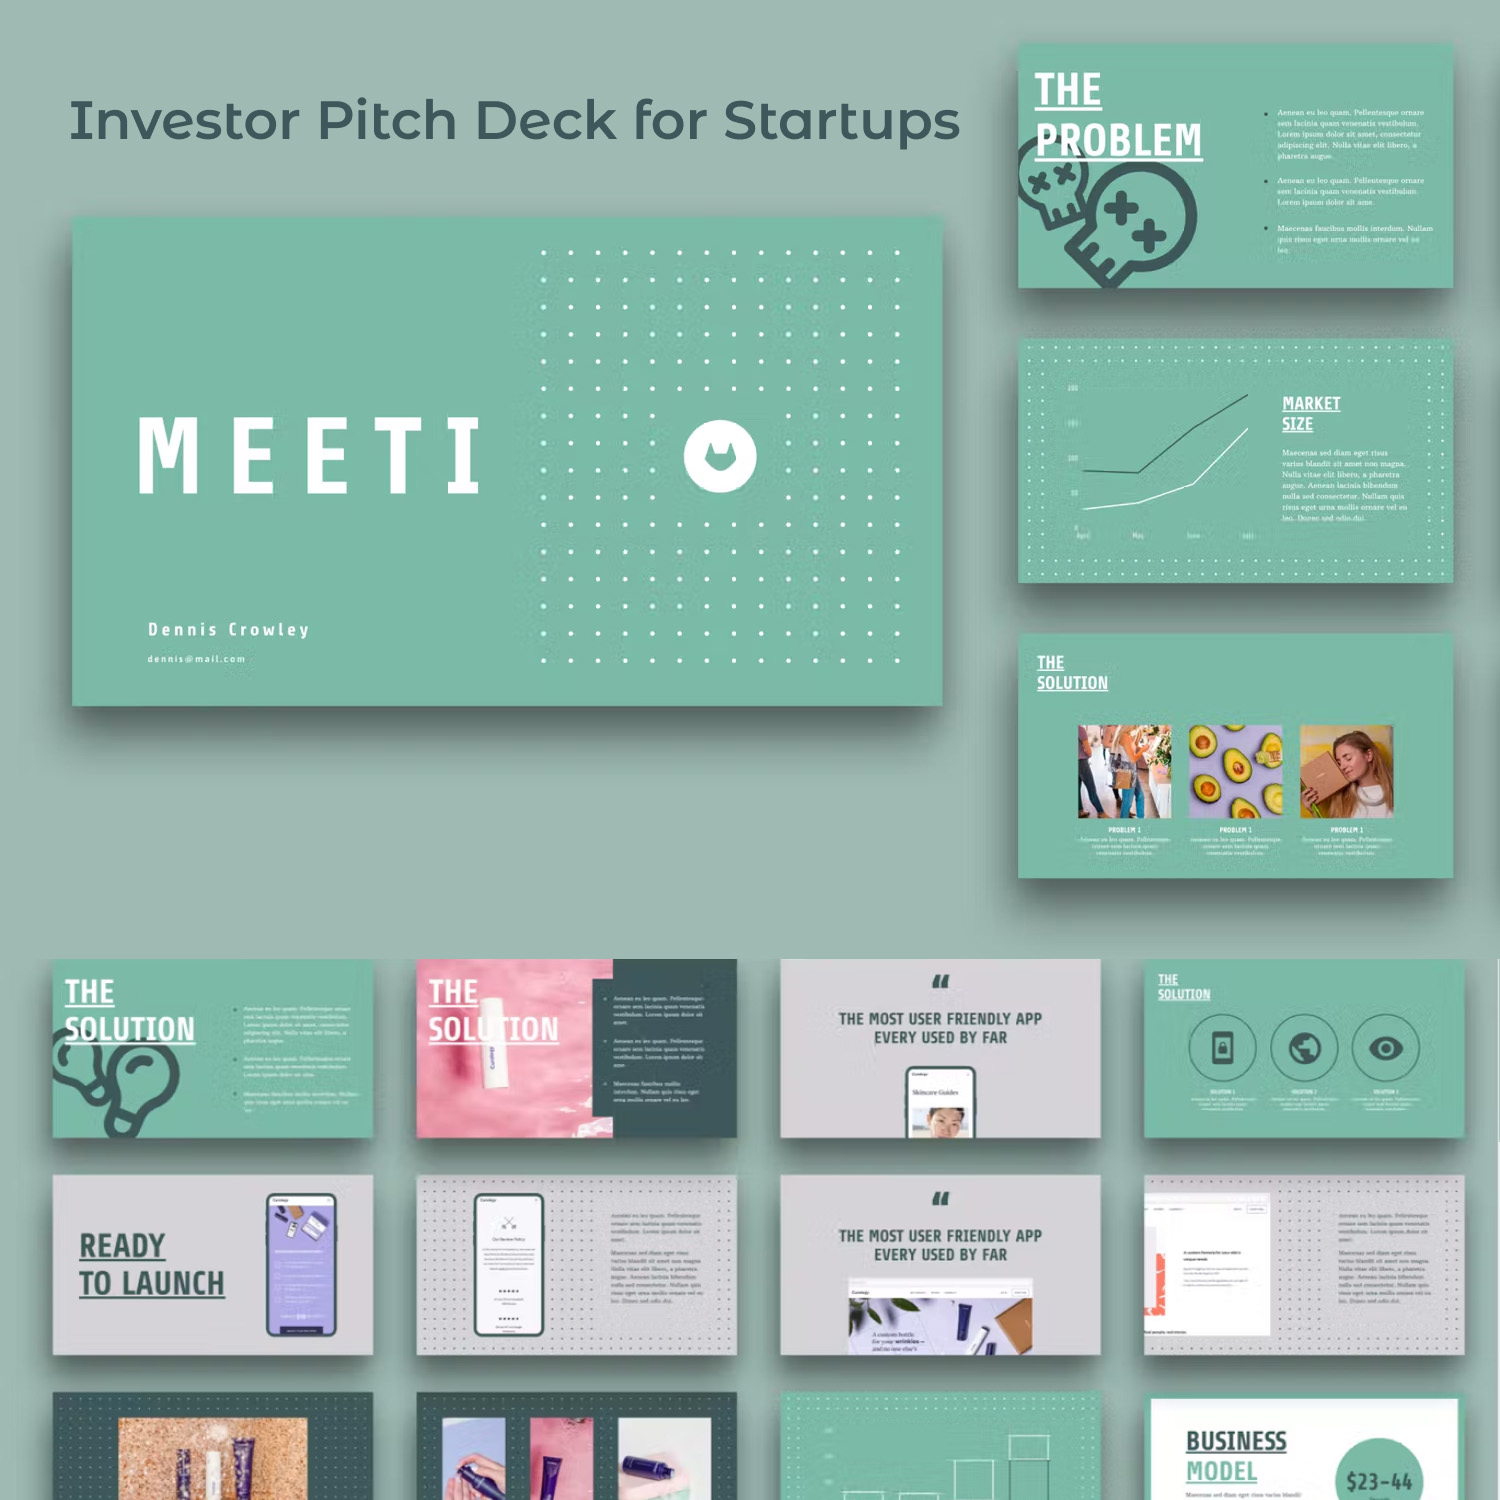 Prints of investor pitch deck for startups.